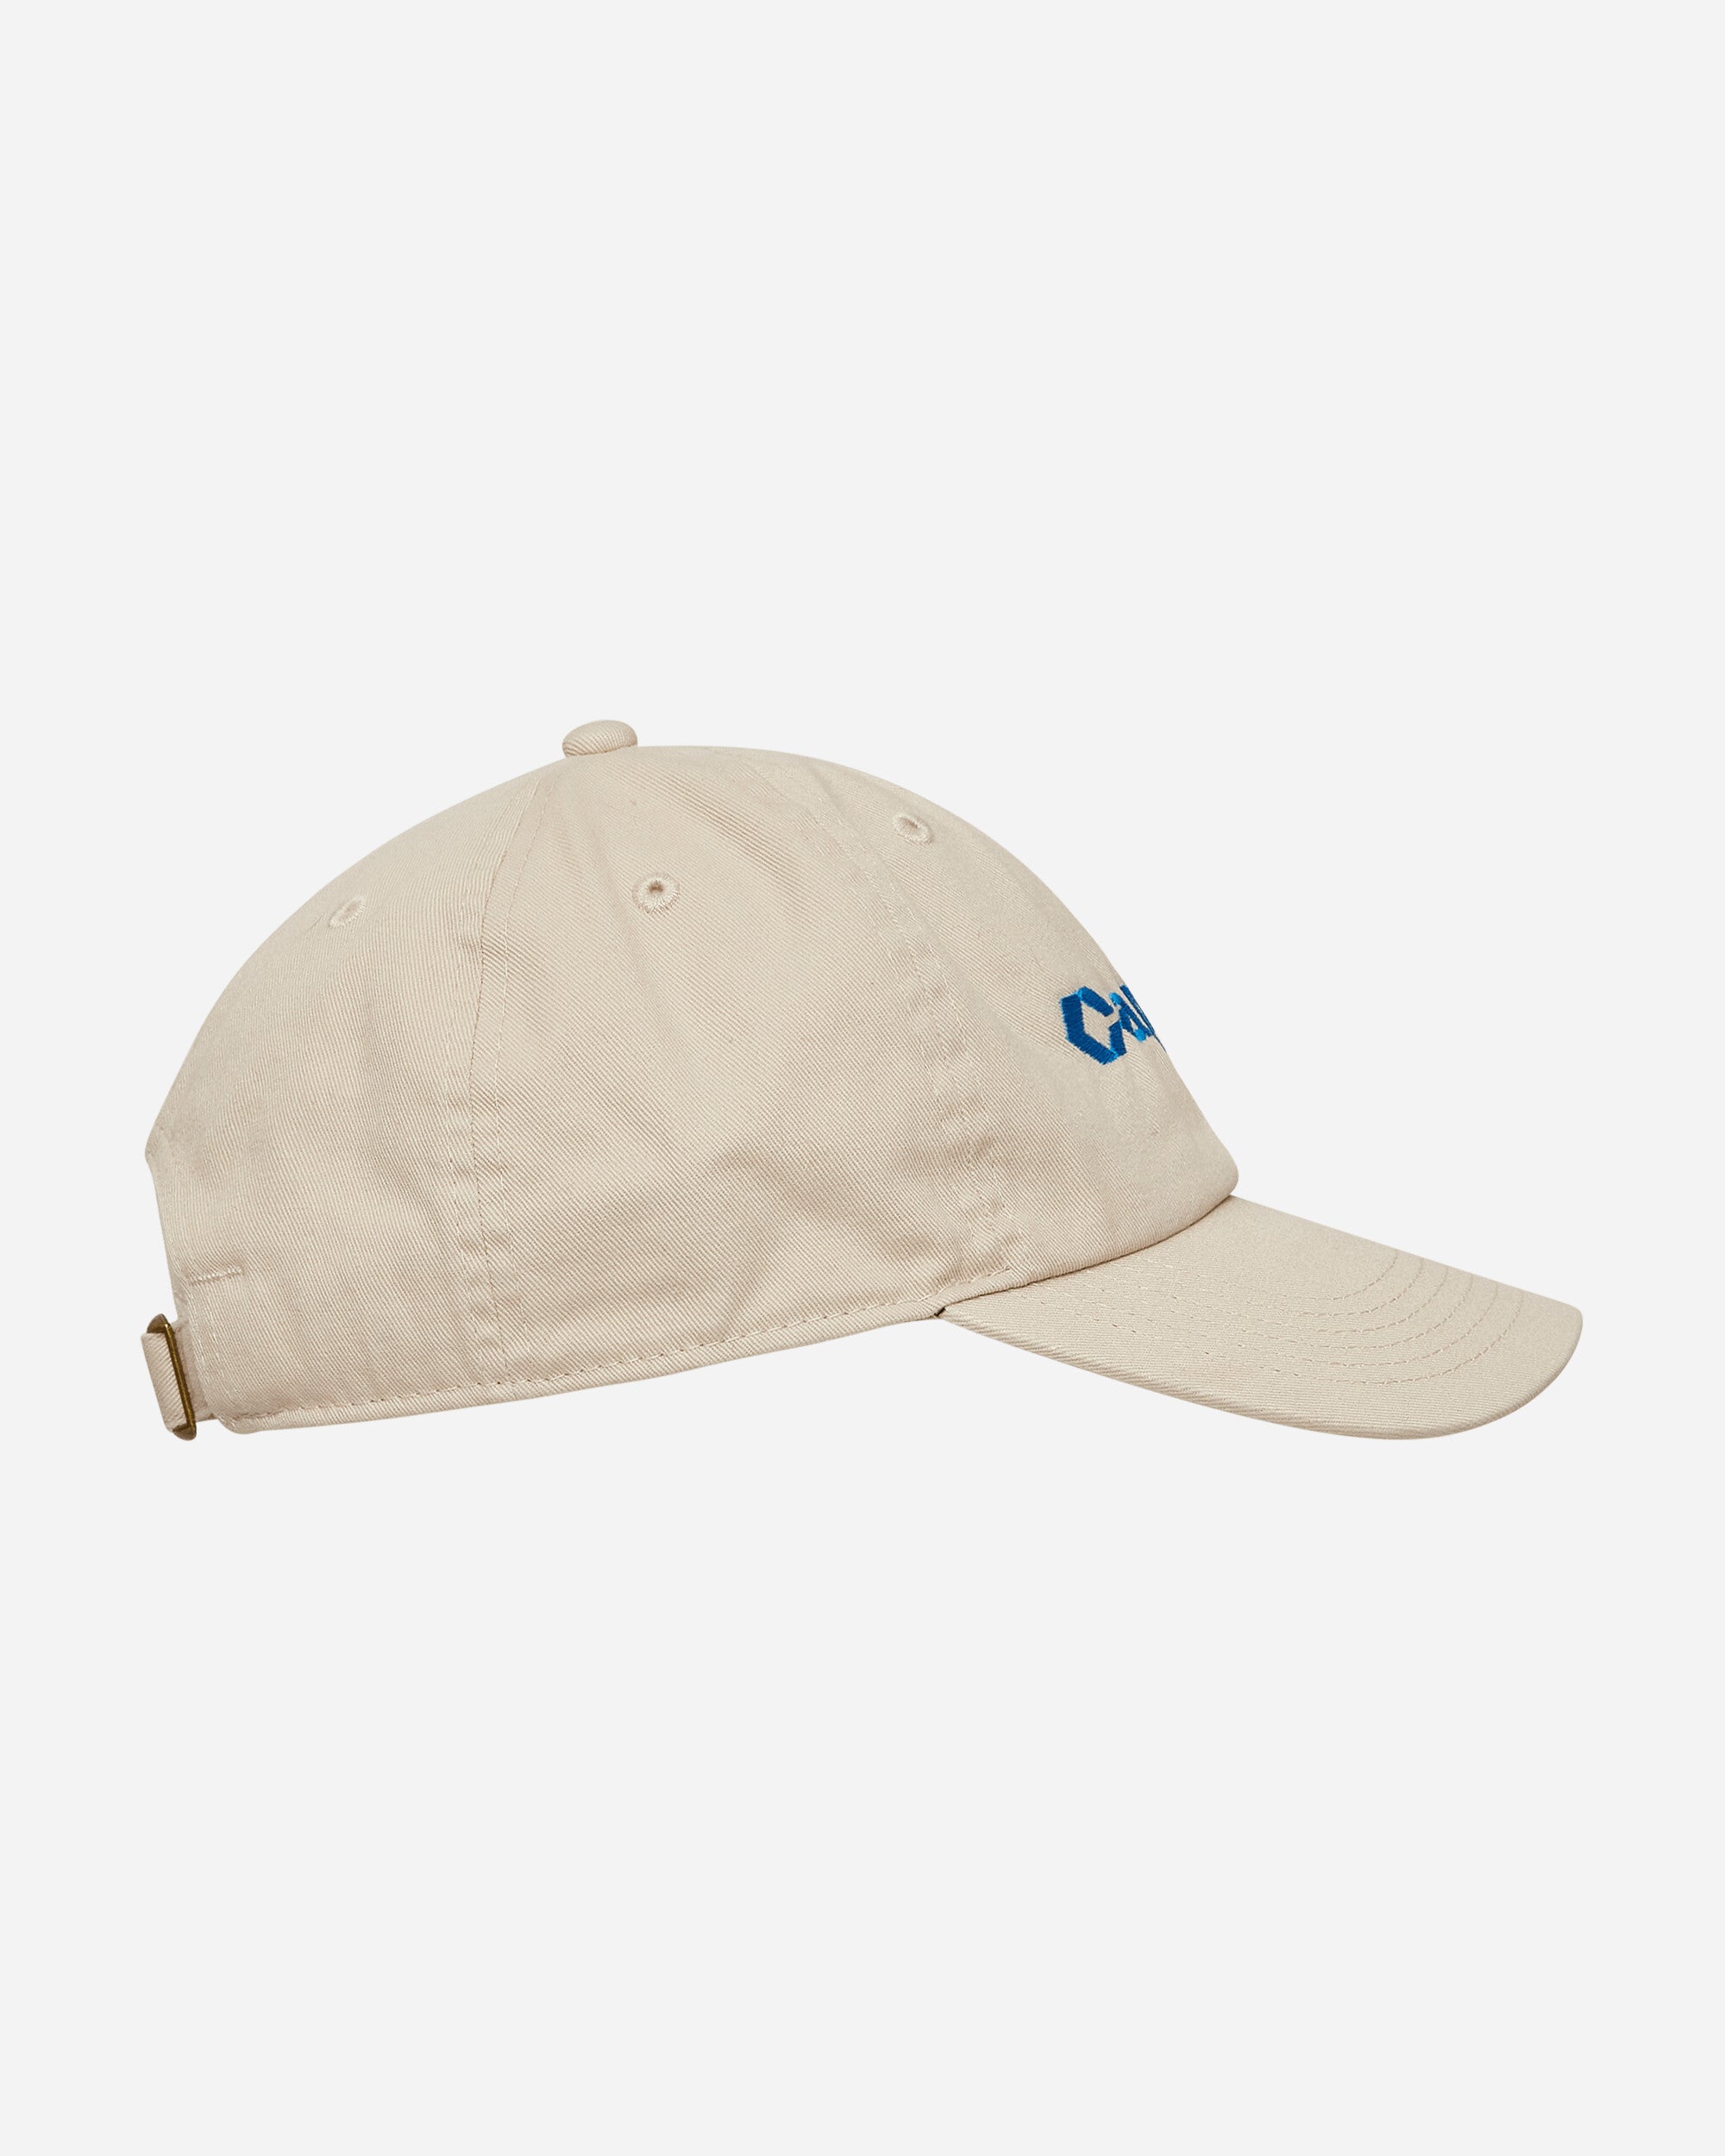 Capsule Capsule Embroidered Logo Cap Ivory Hats Caps CAPLOGOHAT BLUE